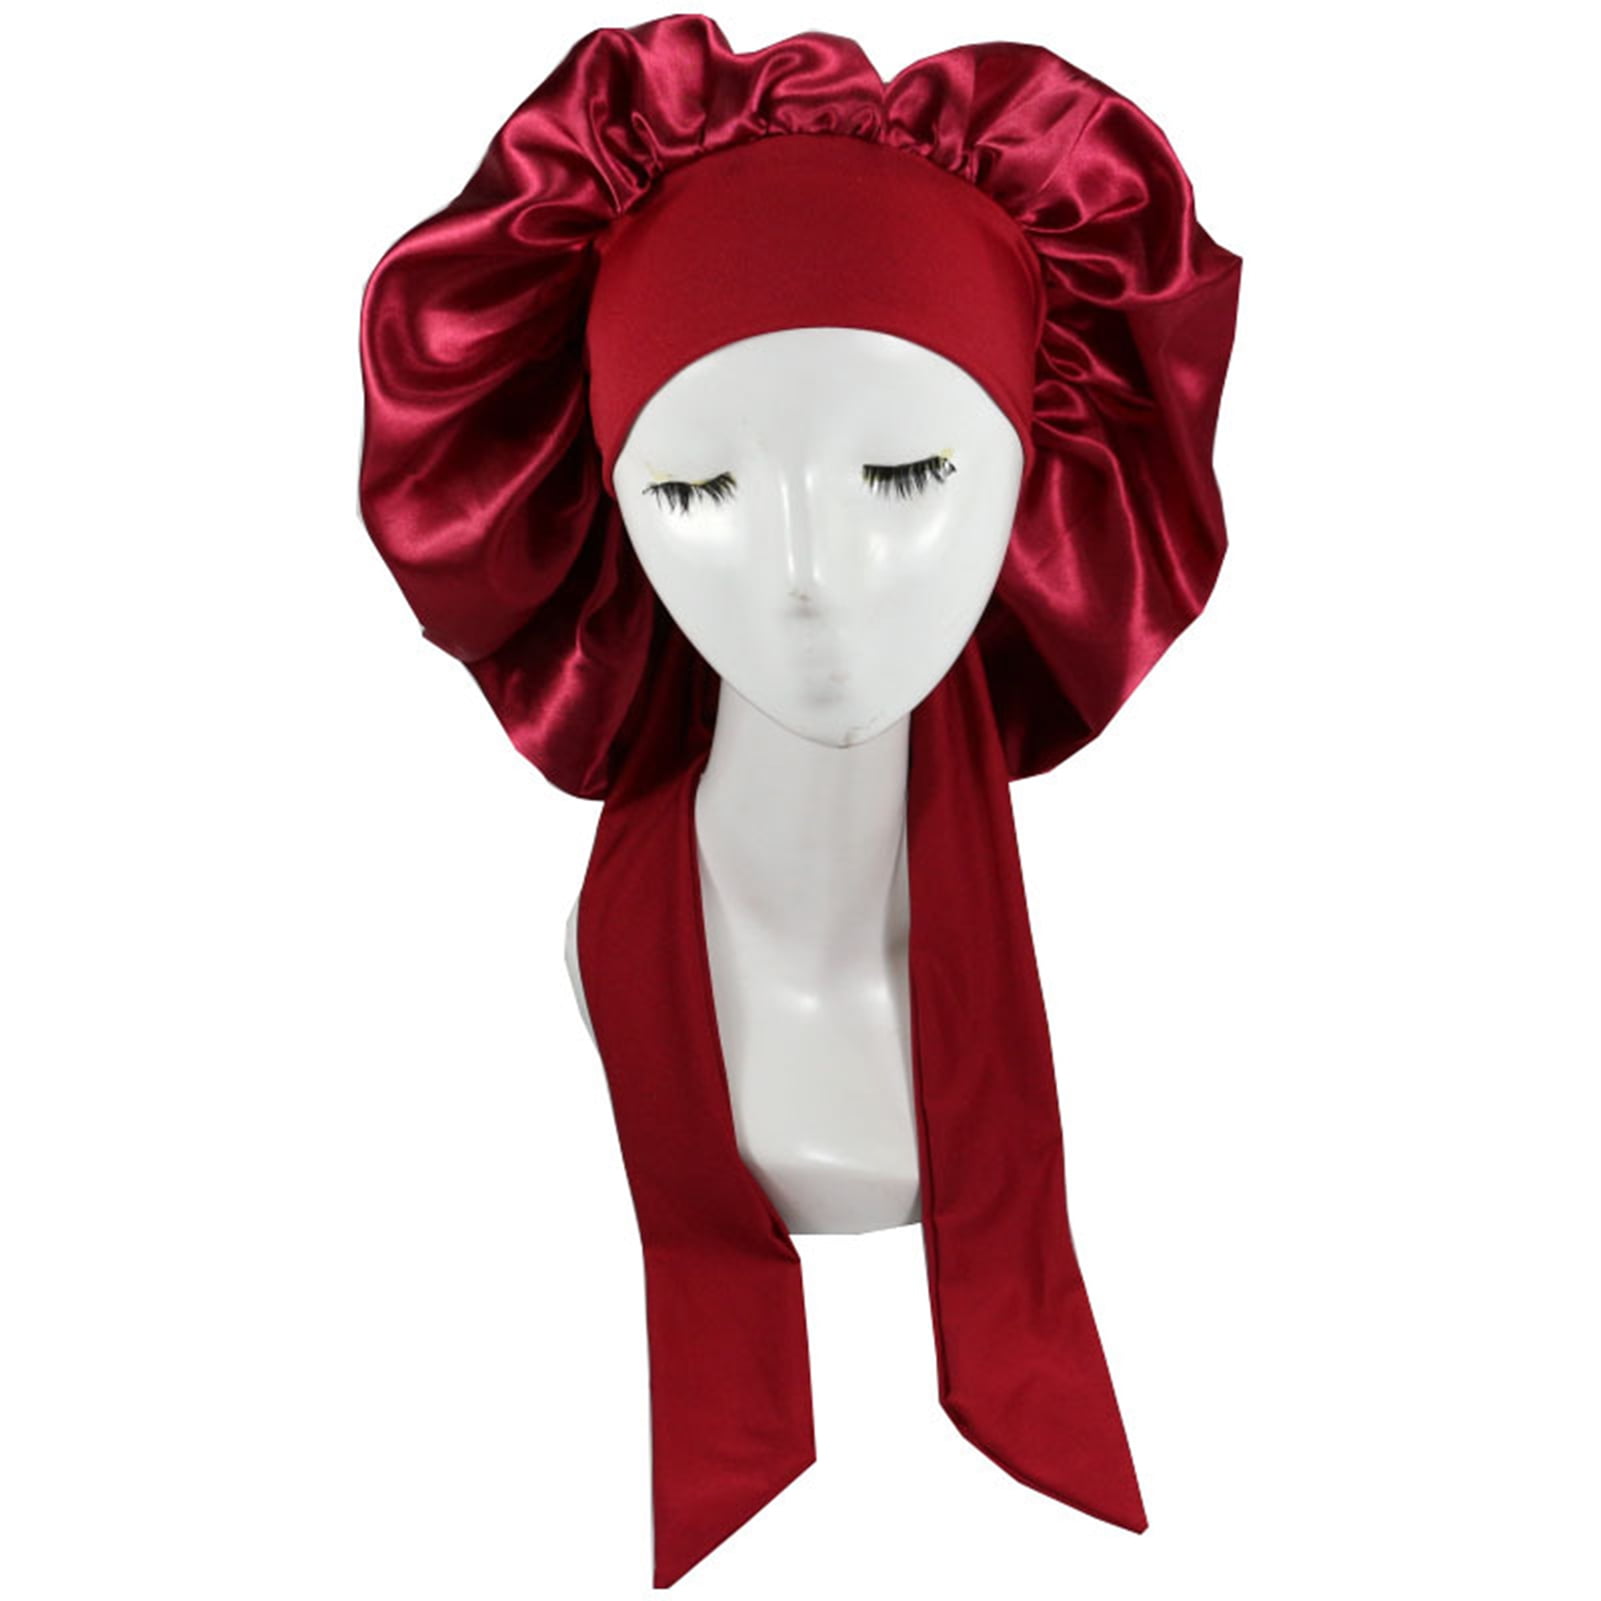 Topekada 3 Pcs Hair Bonnets for Women, Satin Hair Bonnet for